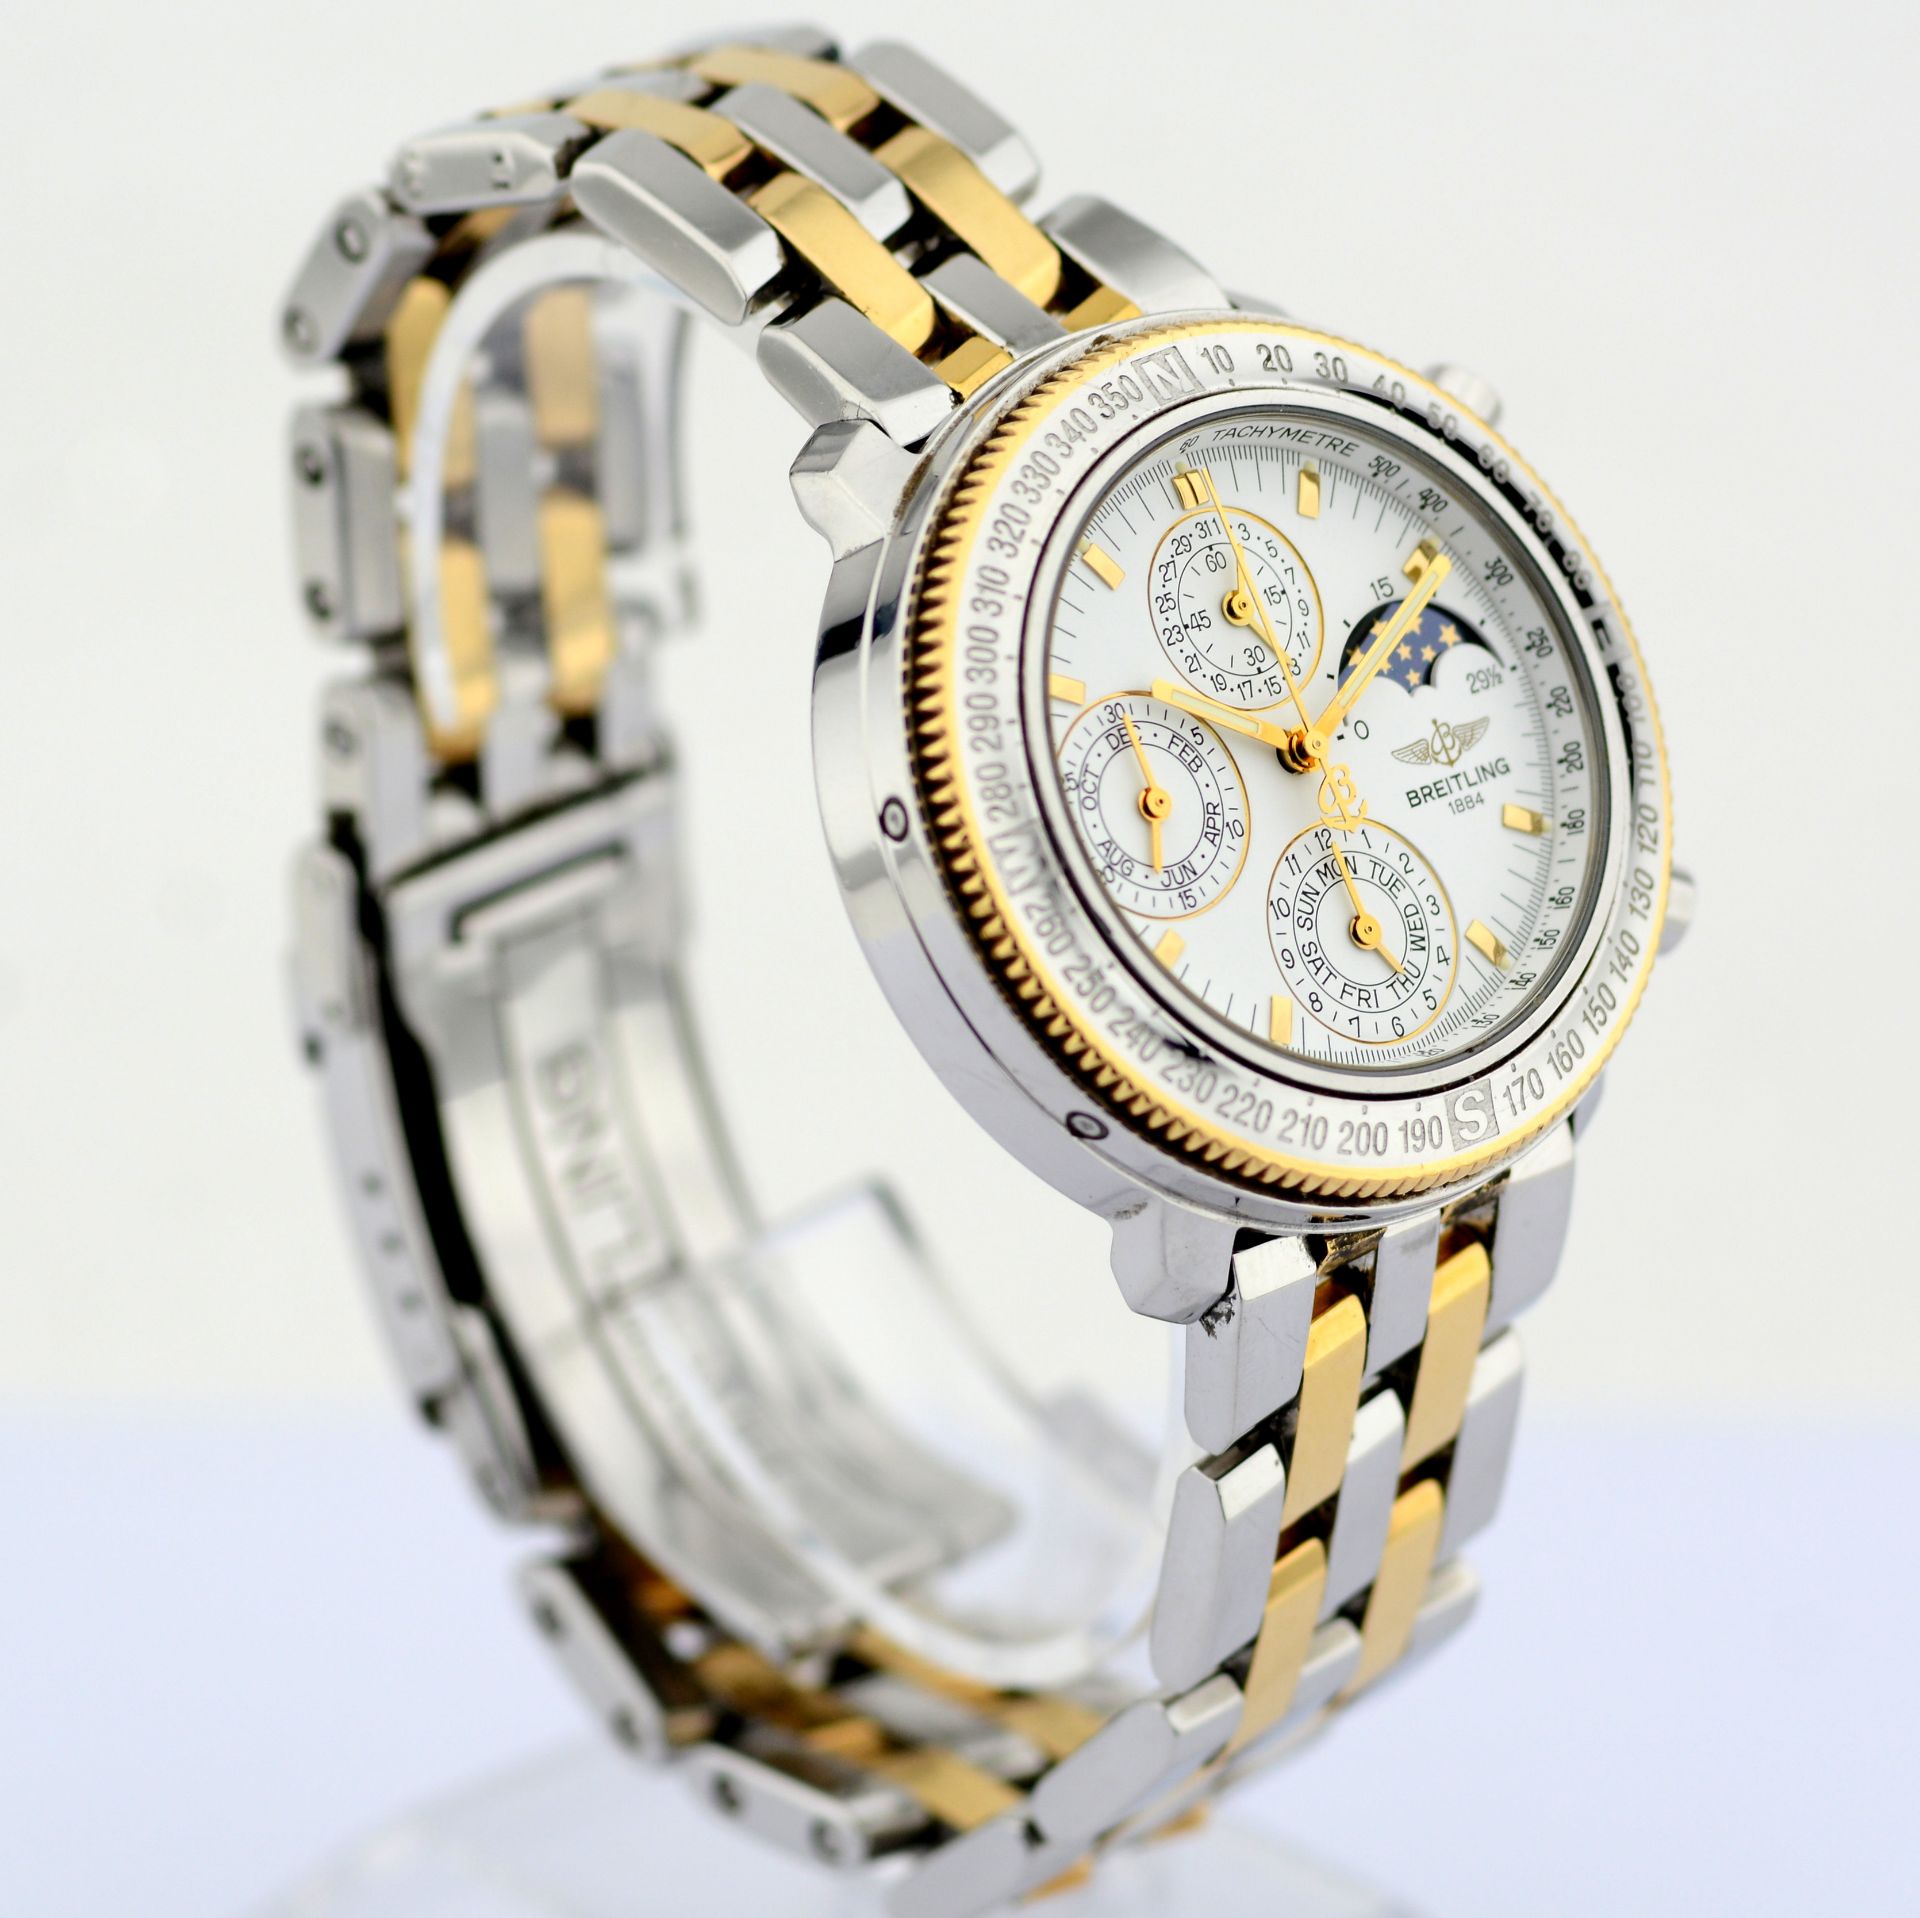 Breitling / Astromat 1461 Chronograph Automatic - Gentlmen's Steel Wrist Watch - Image 9 of 11